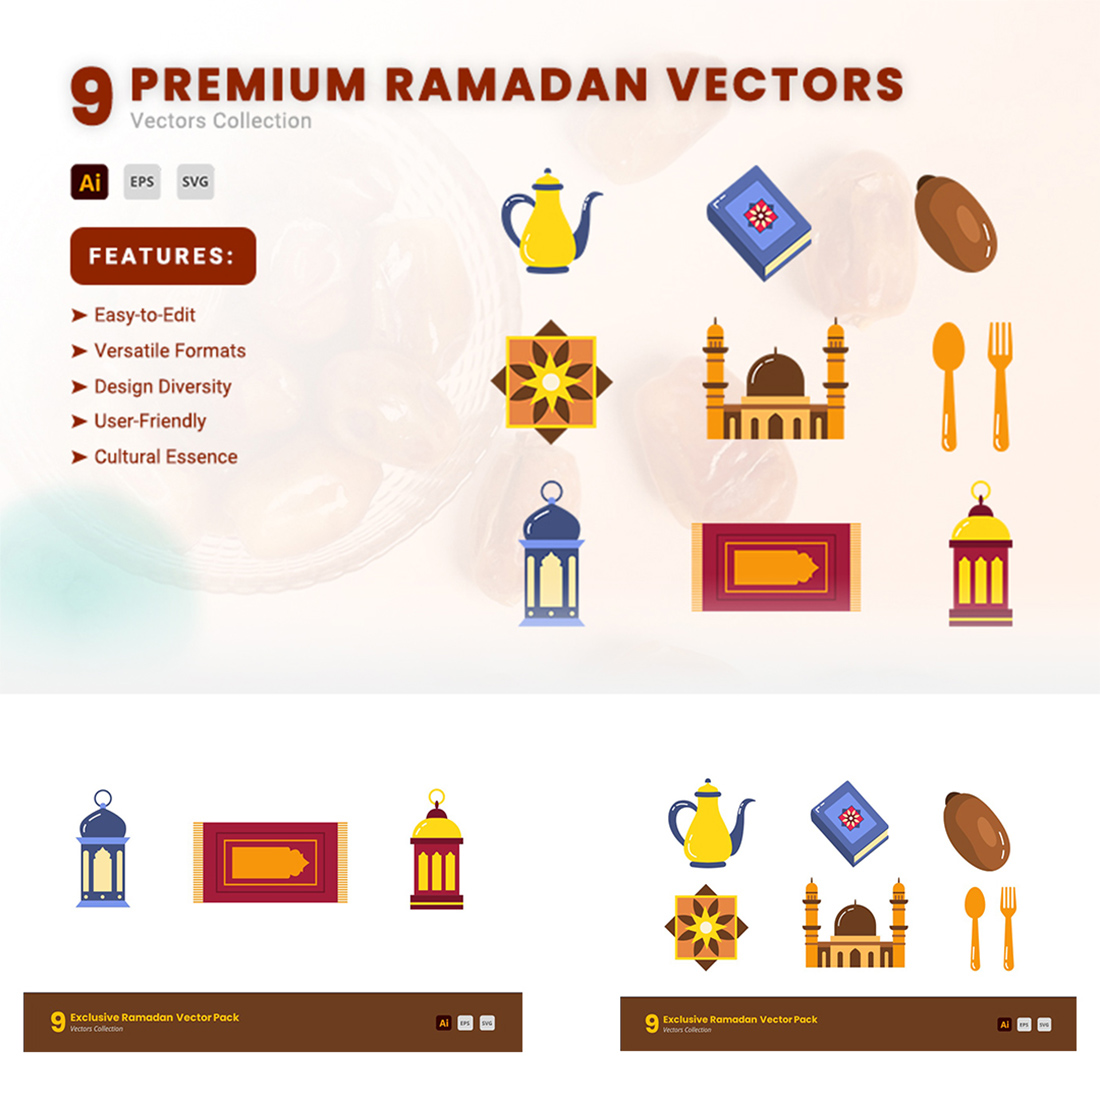 Premium Ramadan Vectors cover image.